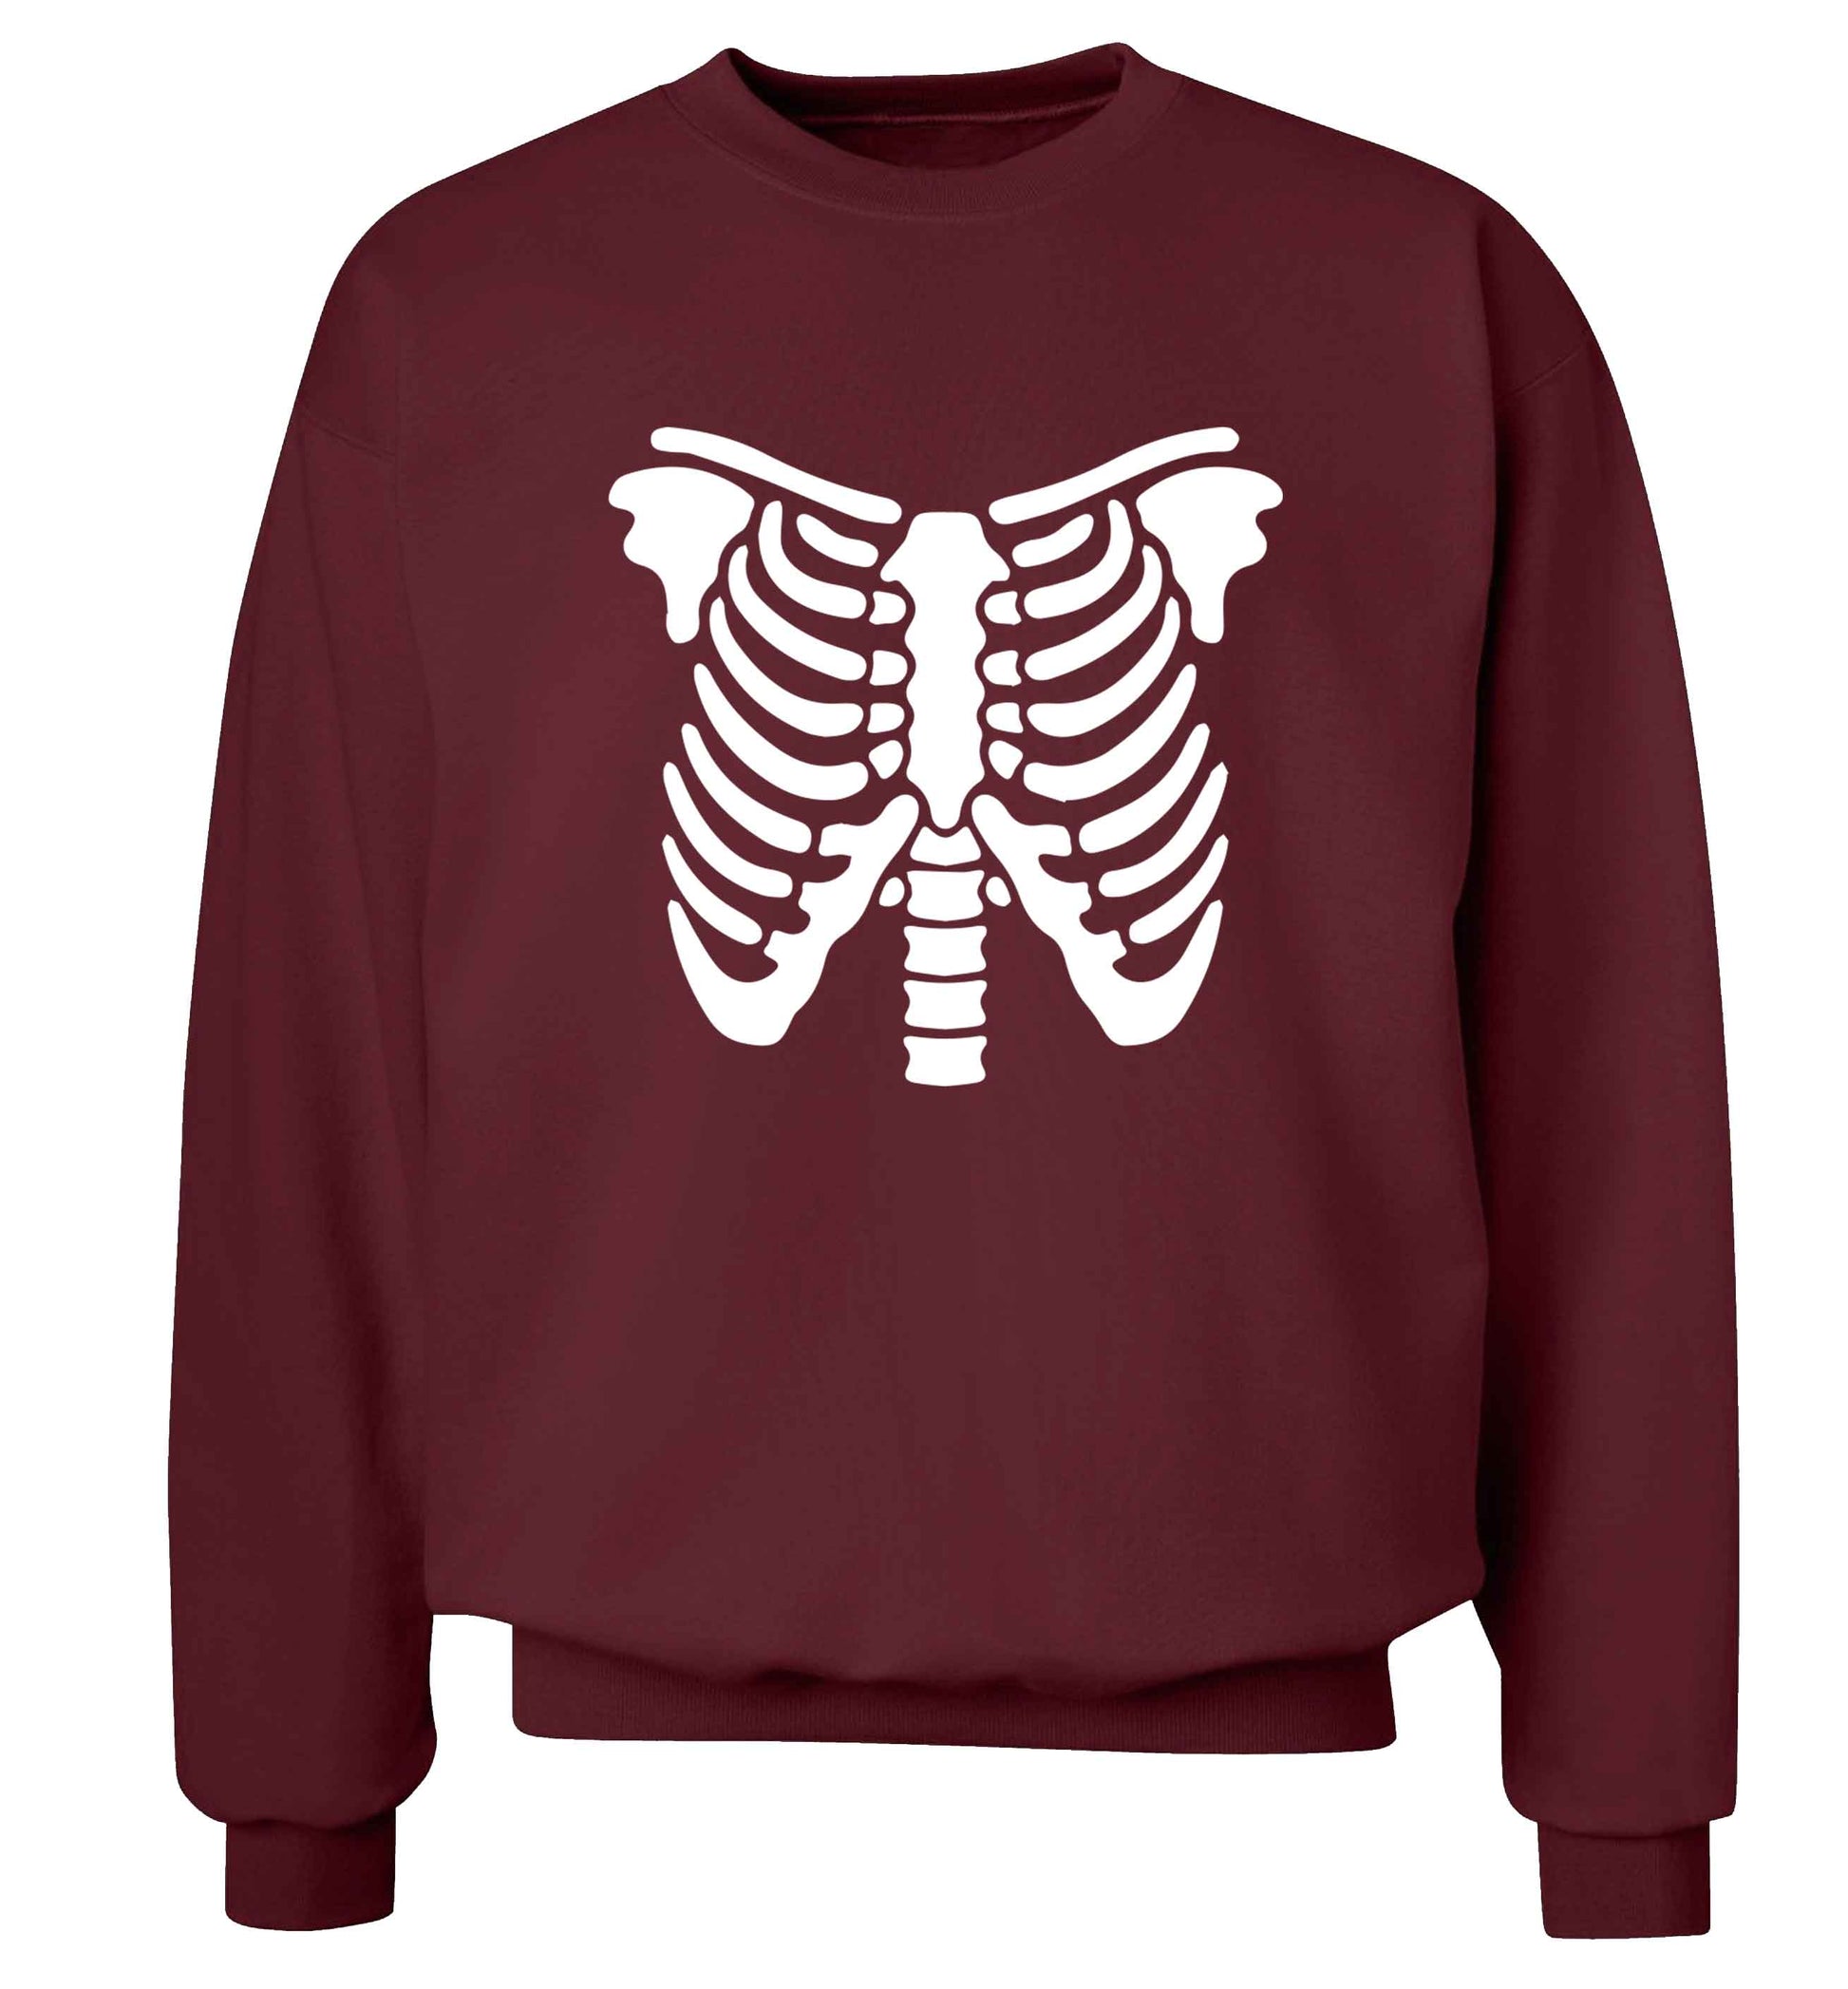 Skeleton ribcage adult's unisex maroon sweater 2XL